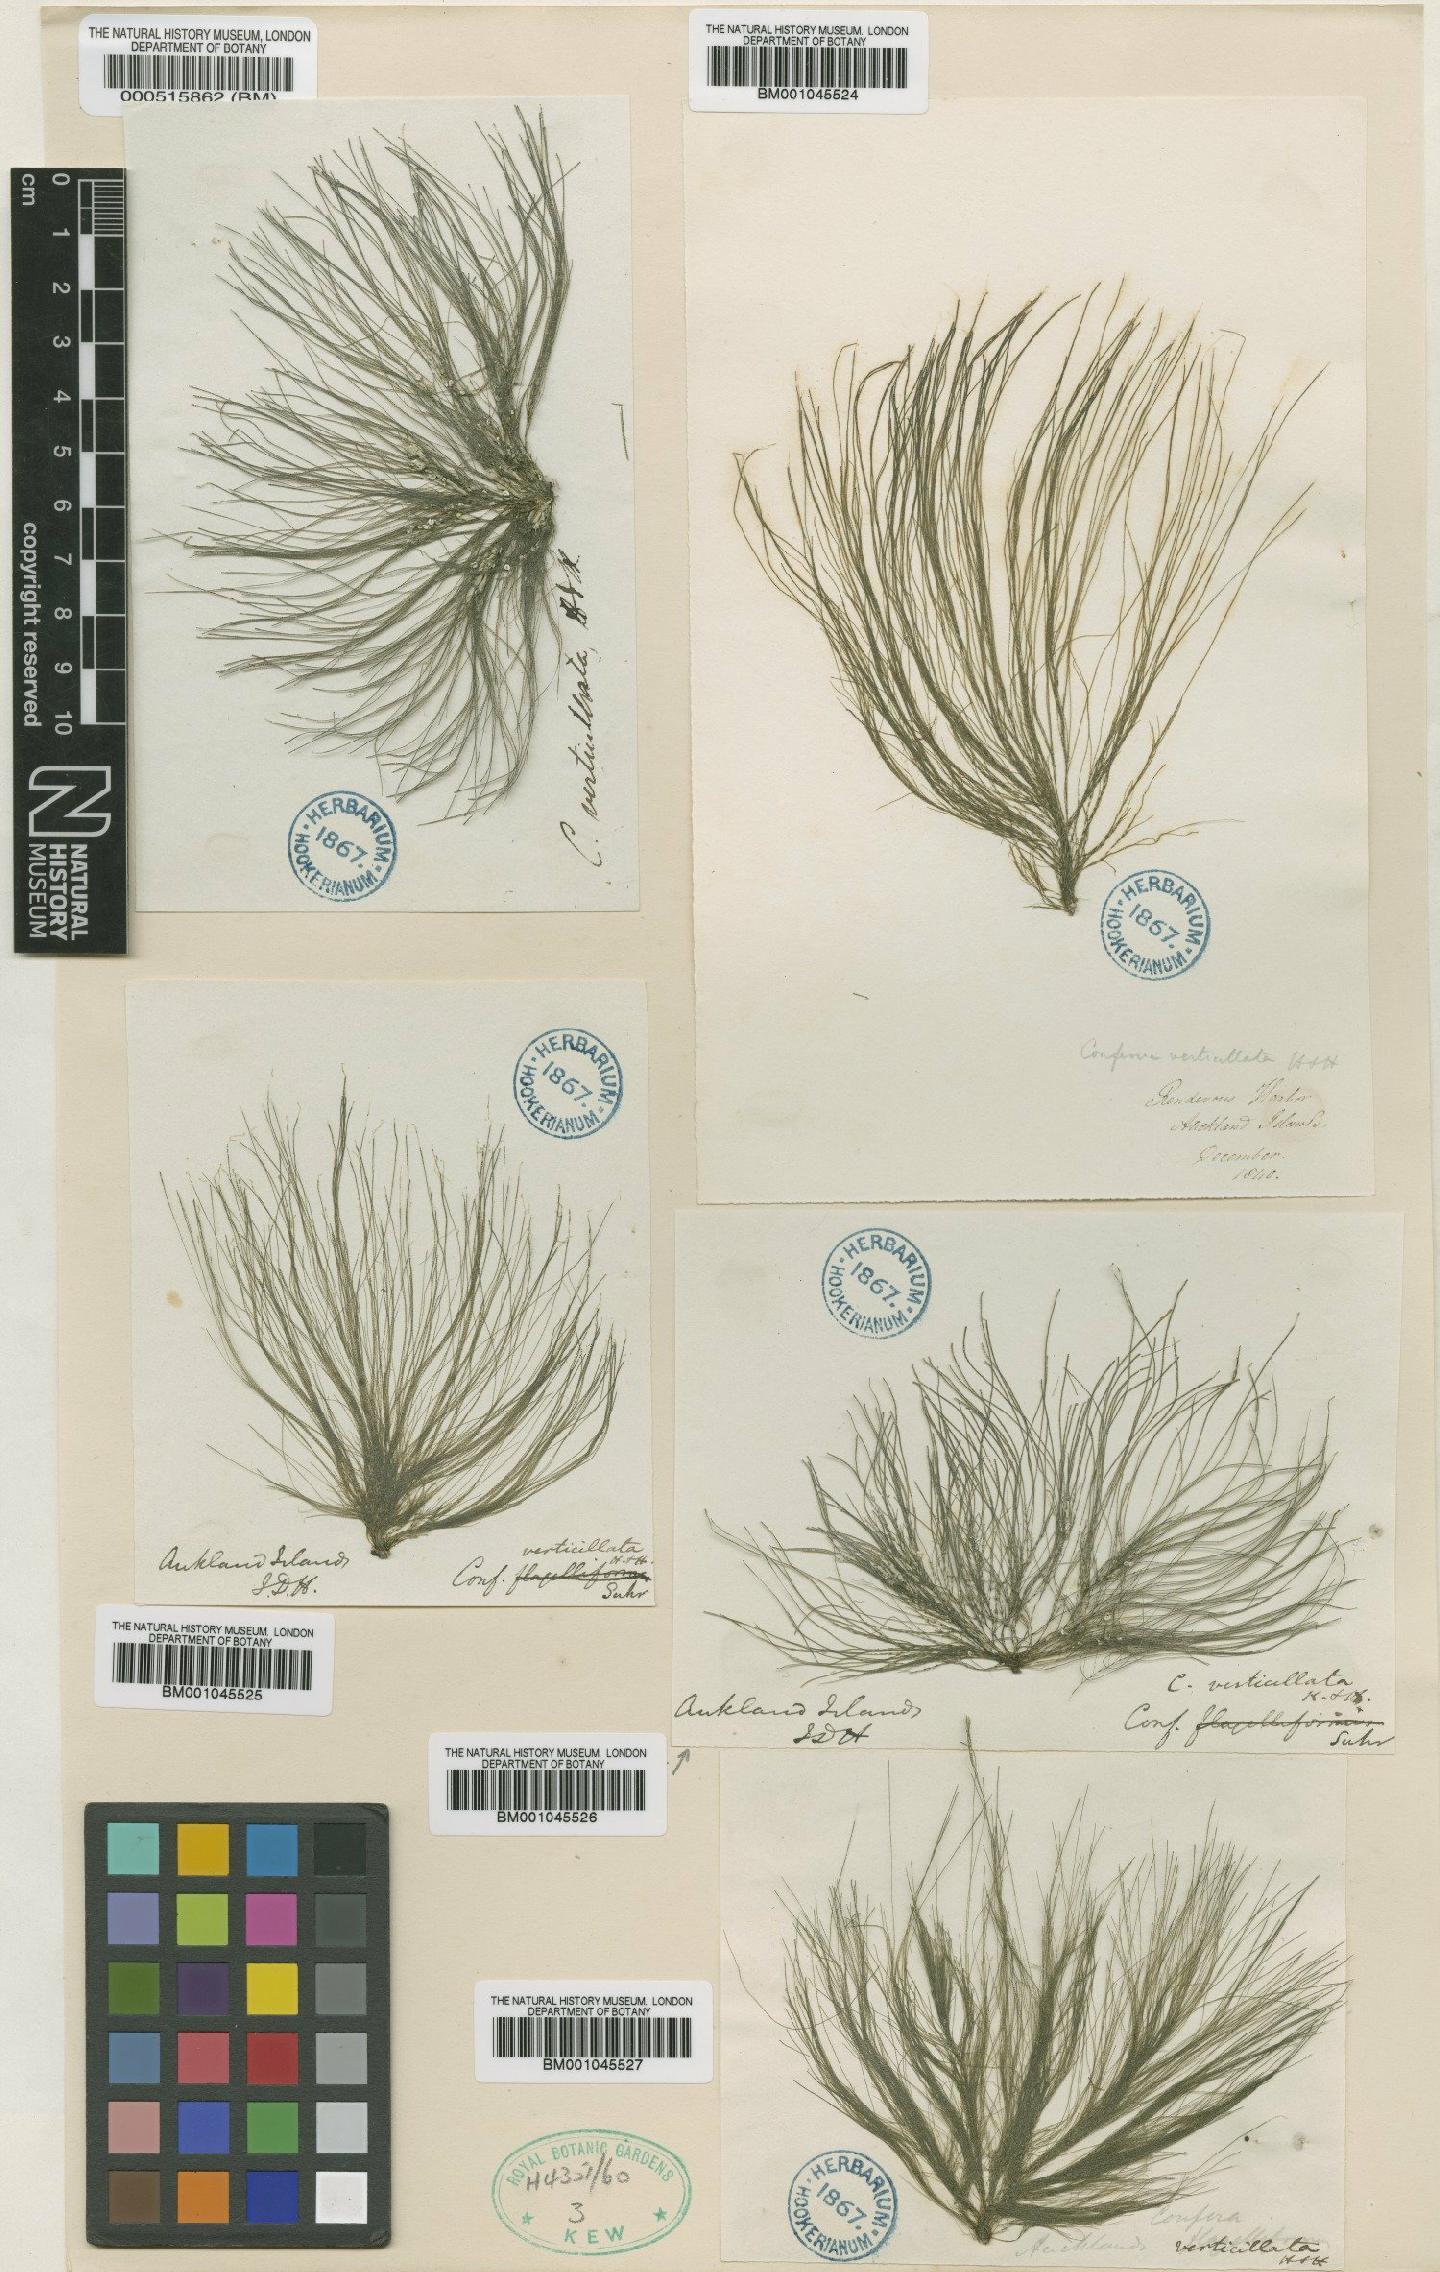 To NHMUK collection (Cladophora verticillata Hook.f. & Harv.; TYPE; NHMUK:ecatalogue:4830586)